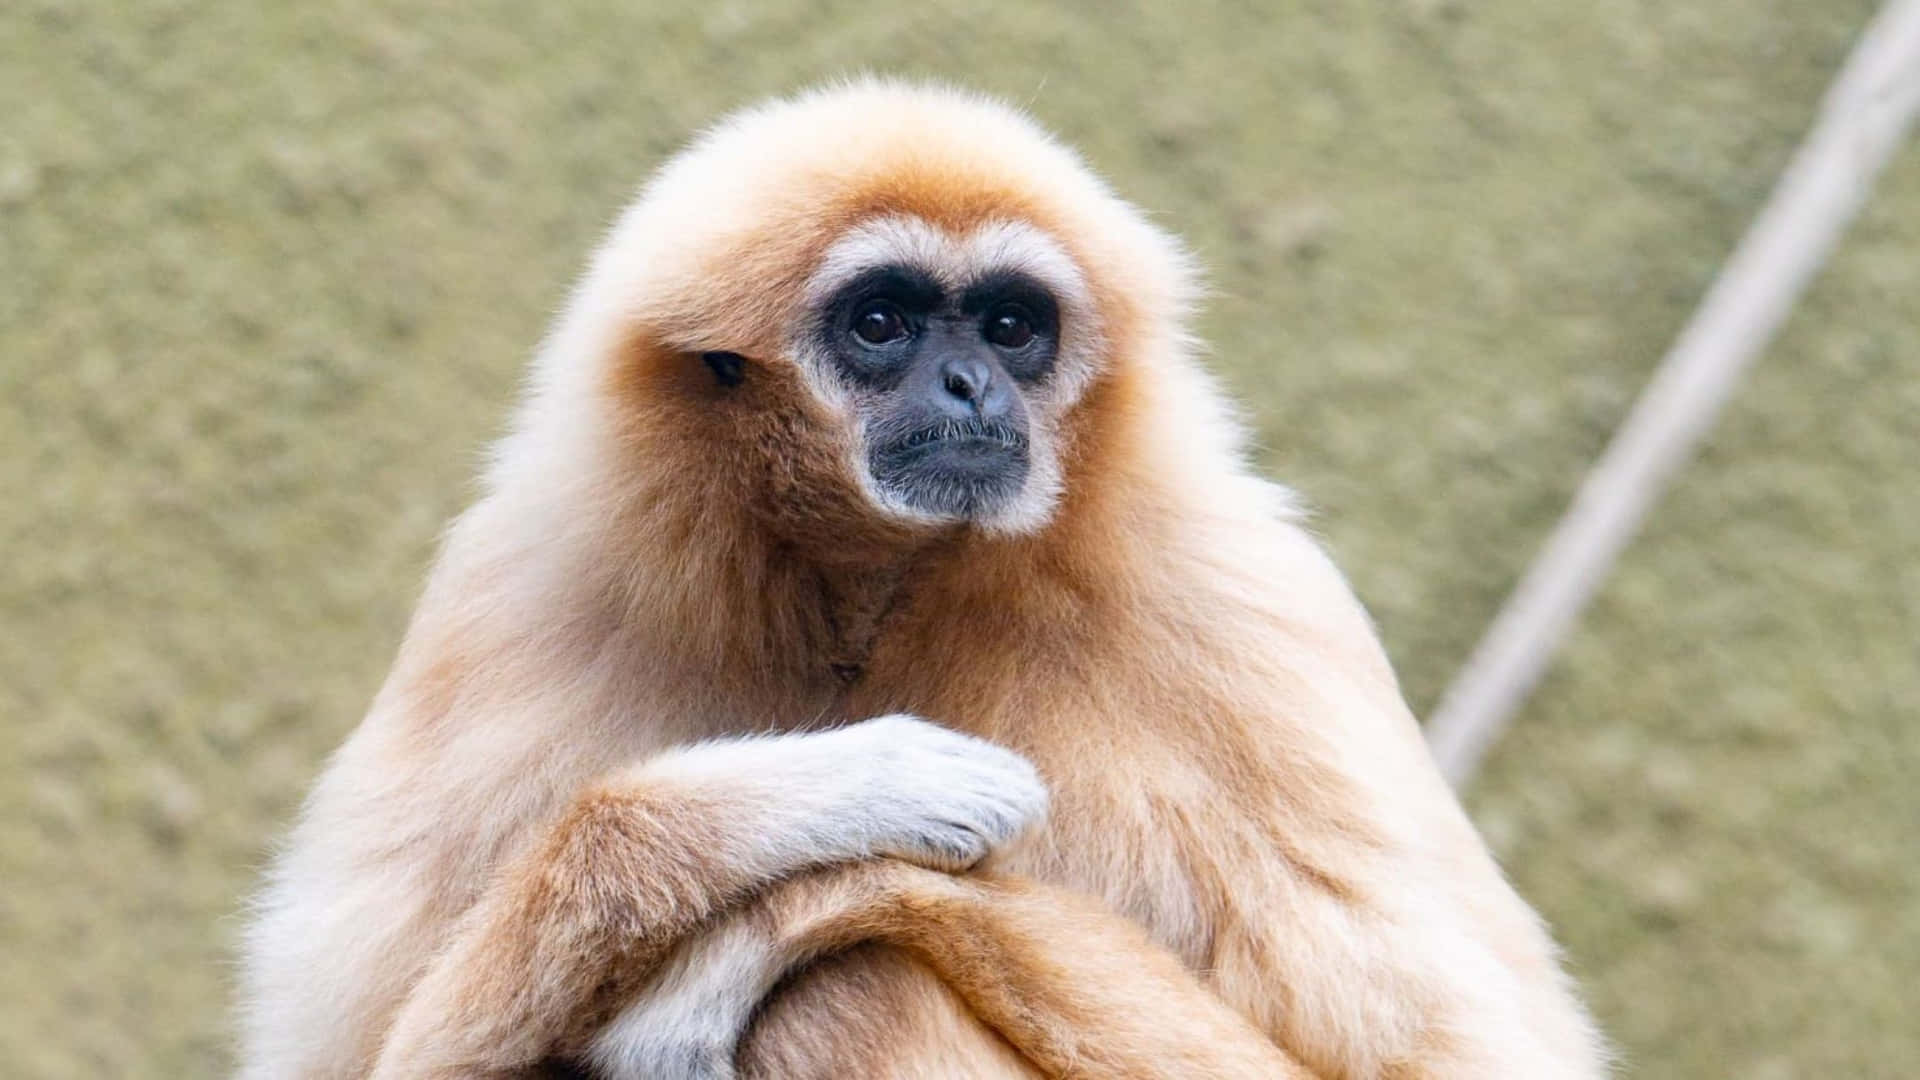 Captivating Gibbon in its Natural Habitat